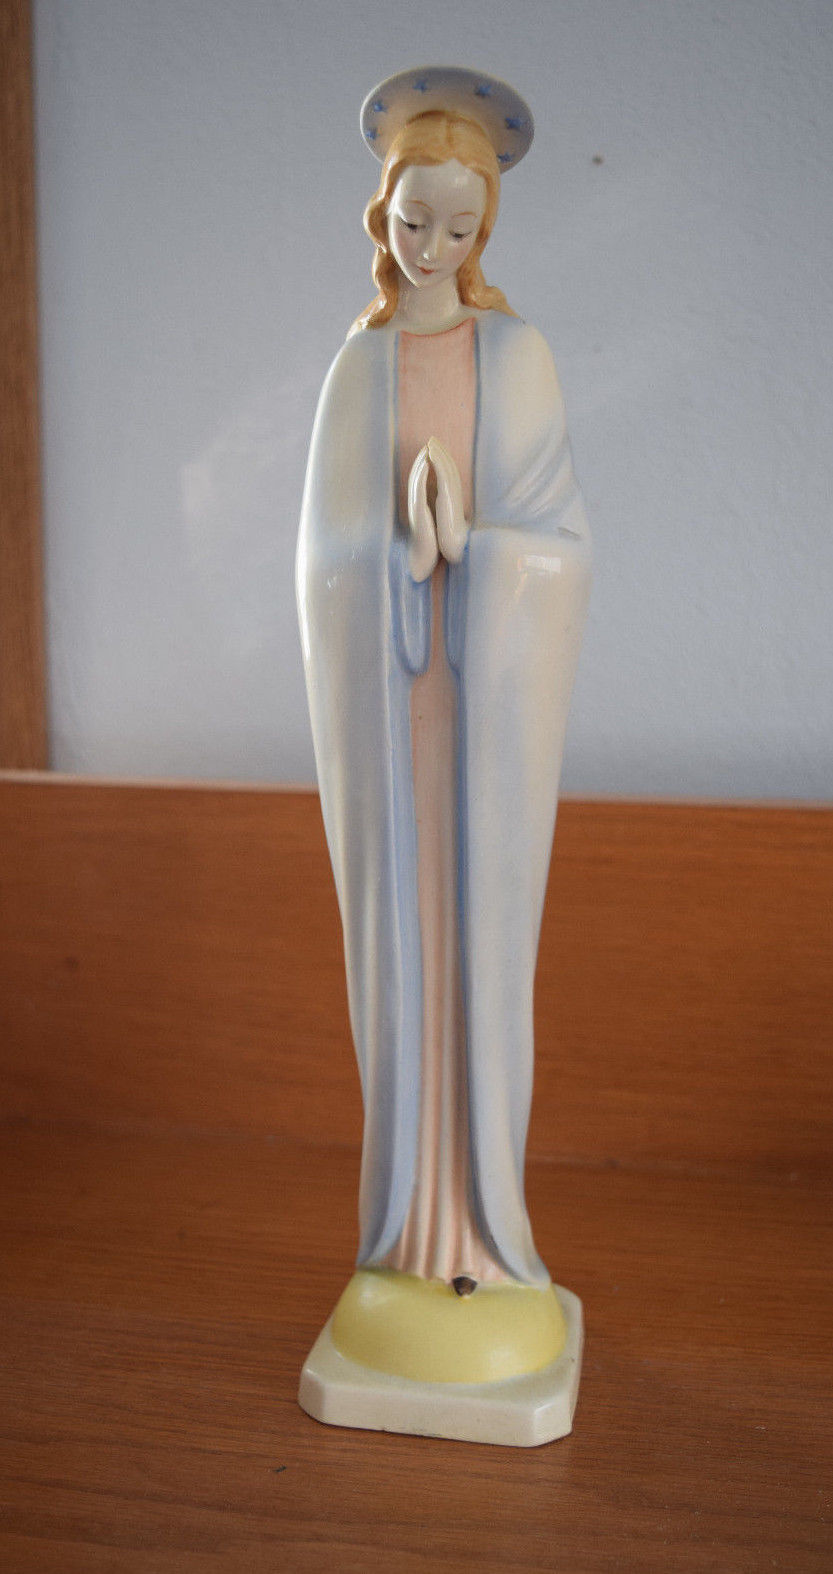 M.J. Hummel Figurine: Virgin Mary U.S. Zone Germany -- Antique Guide Details